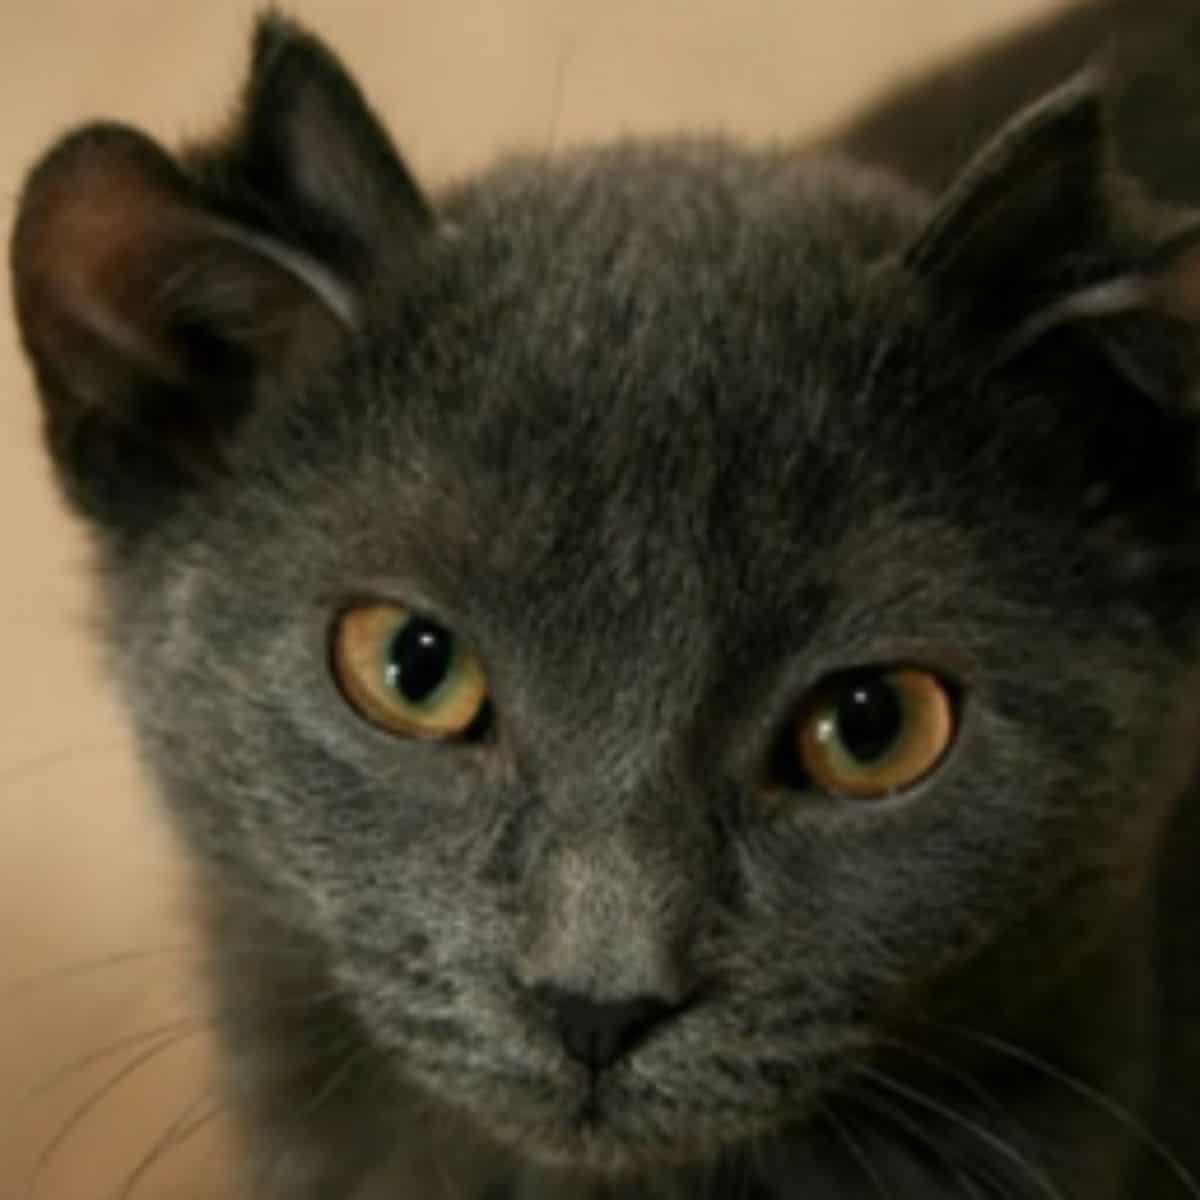 close-up photo of yoda the cat